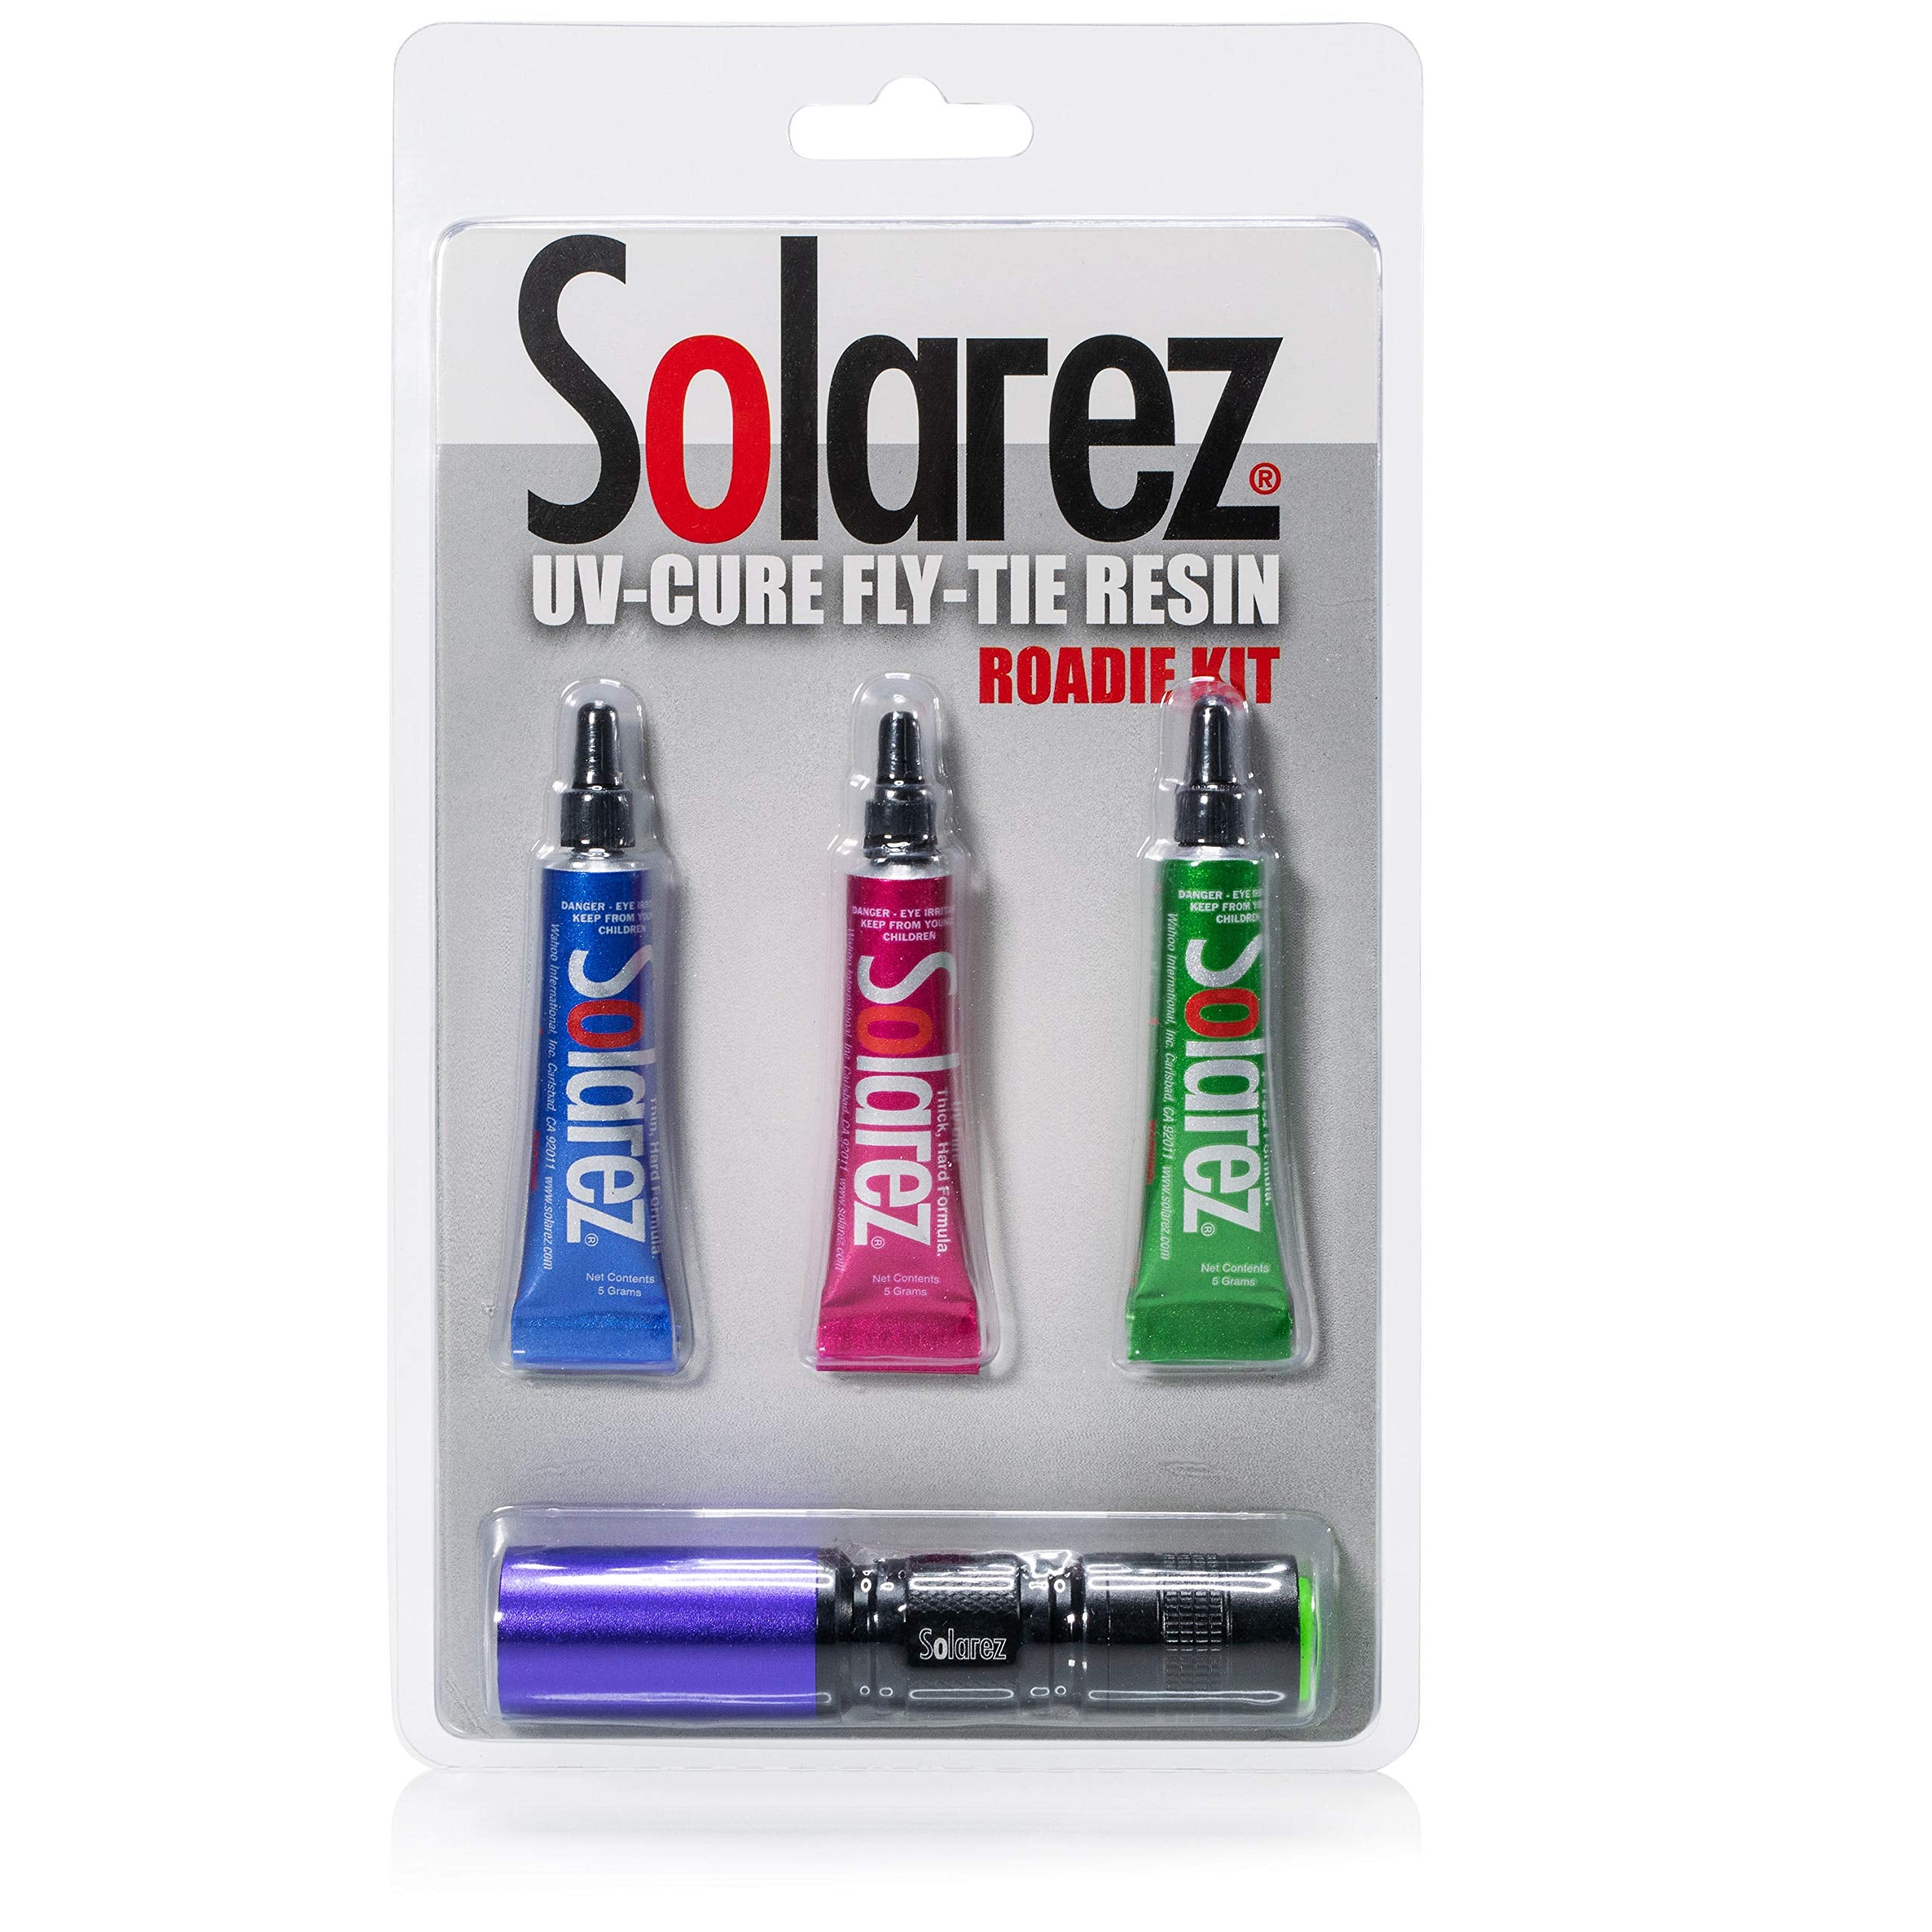 Solarez Roadie UV Resin Kit with torch — The Flyfisher